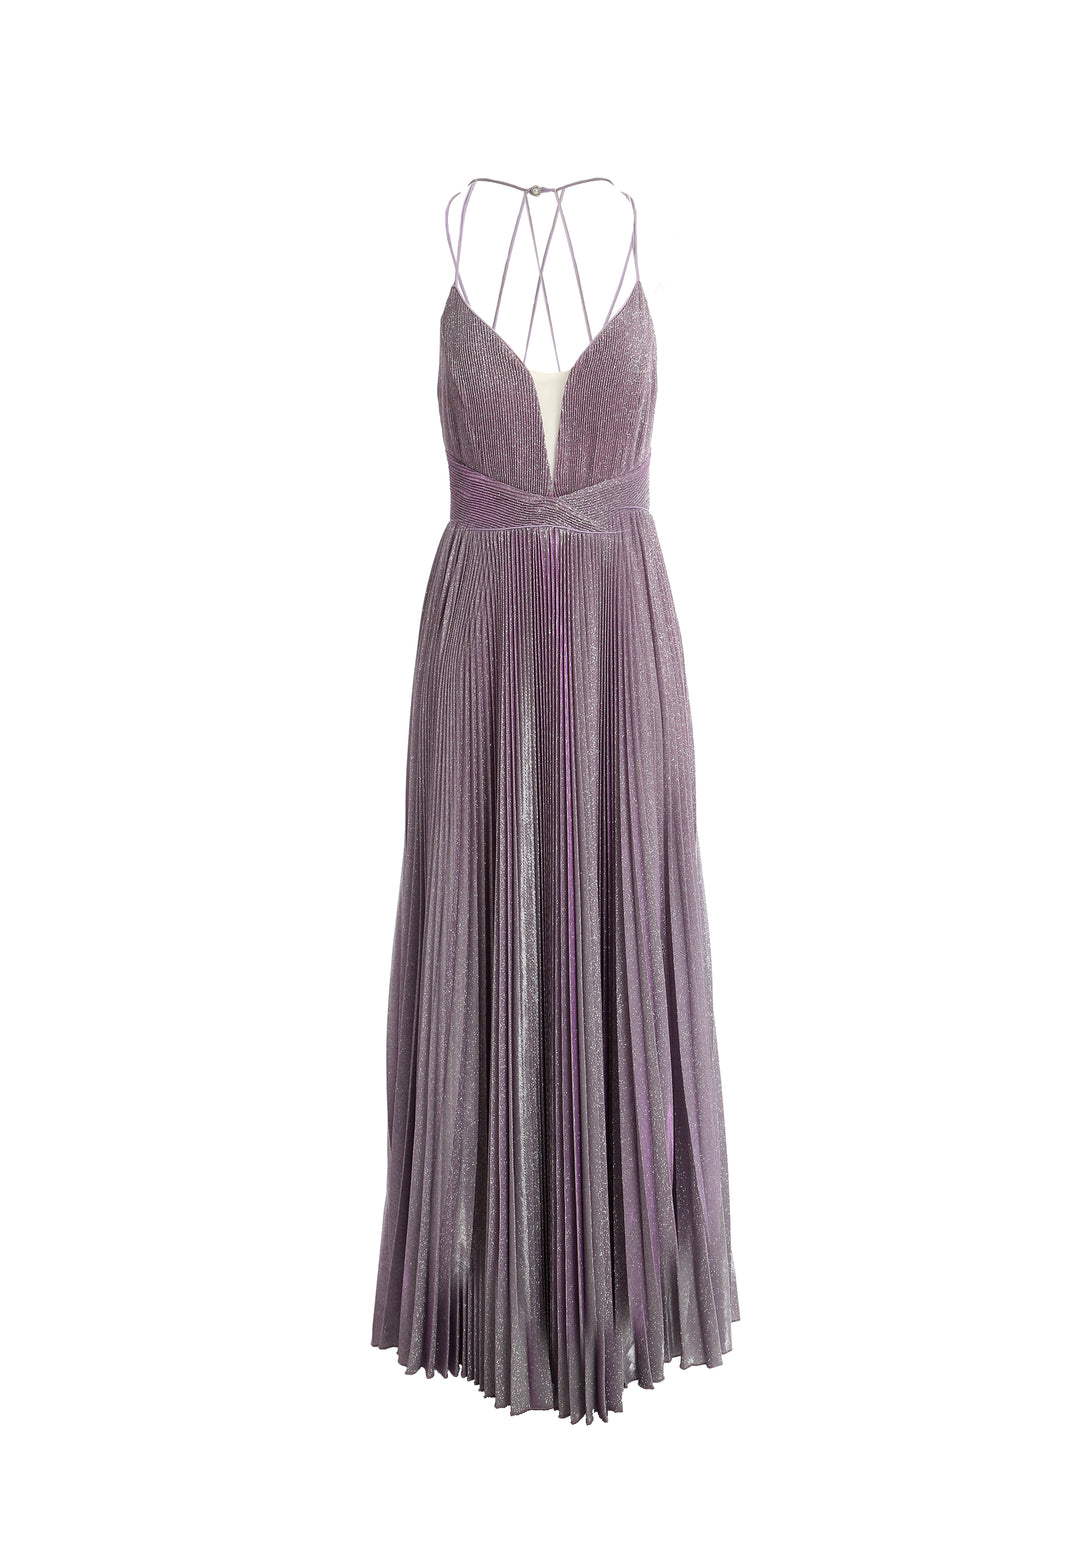 Long sleeveless dress made in plissè effect metallic fabric